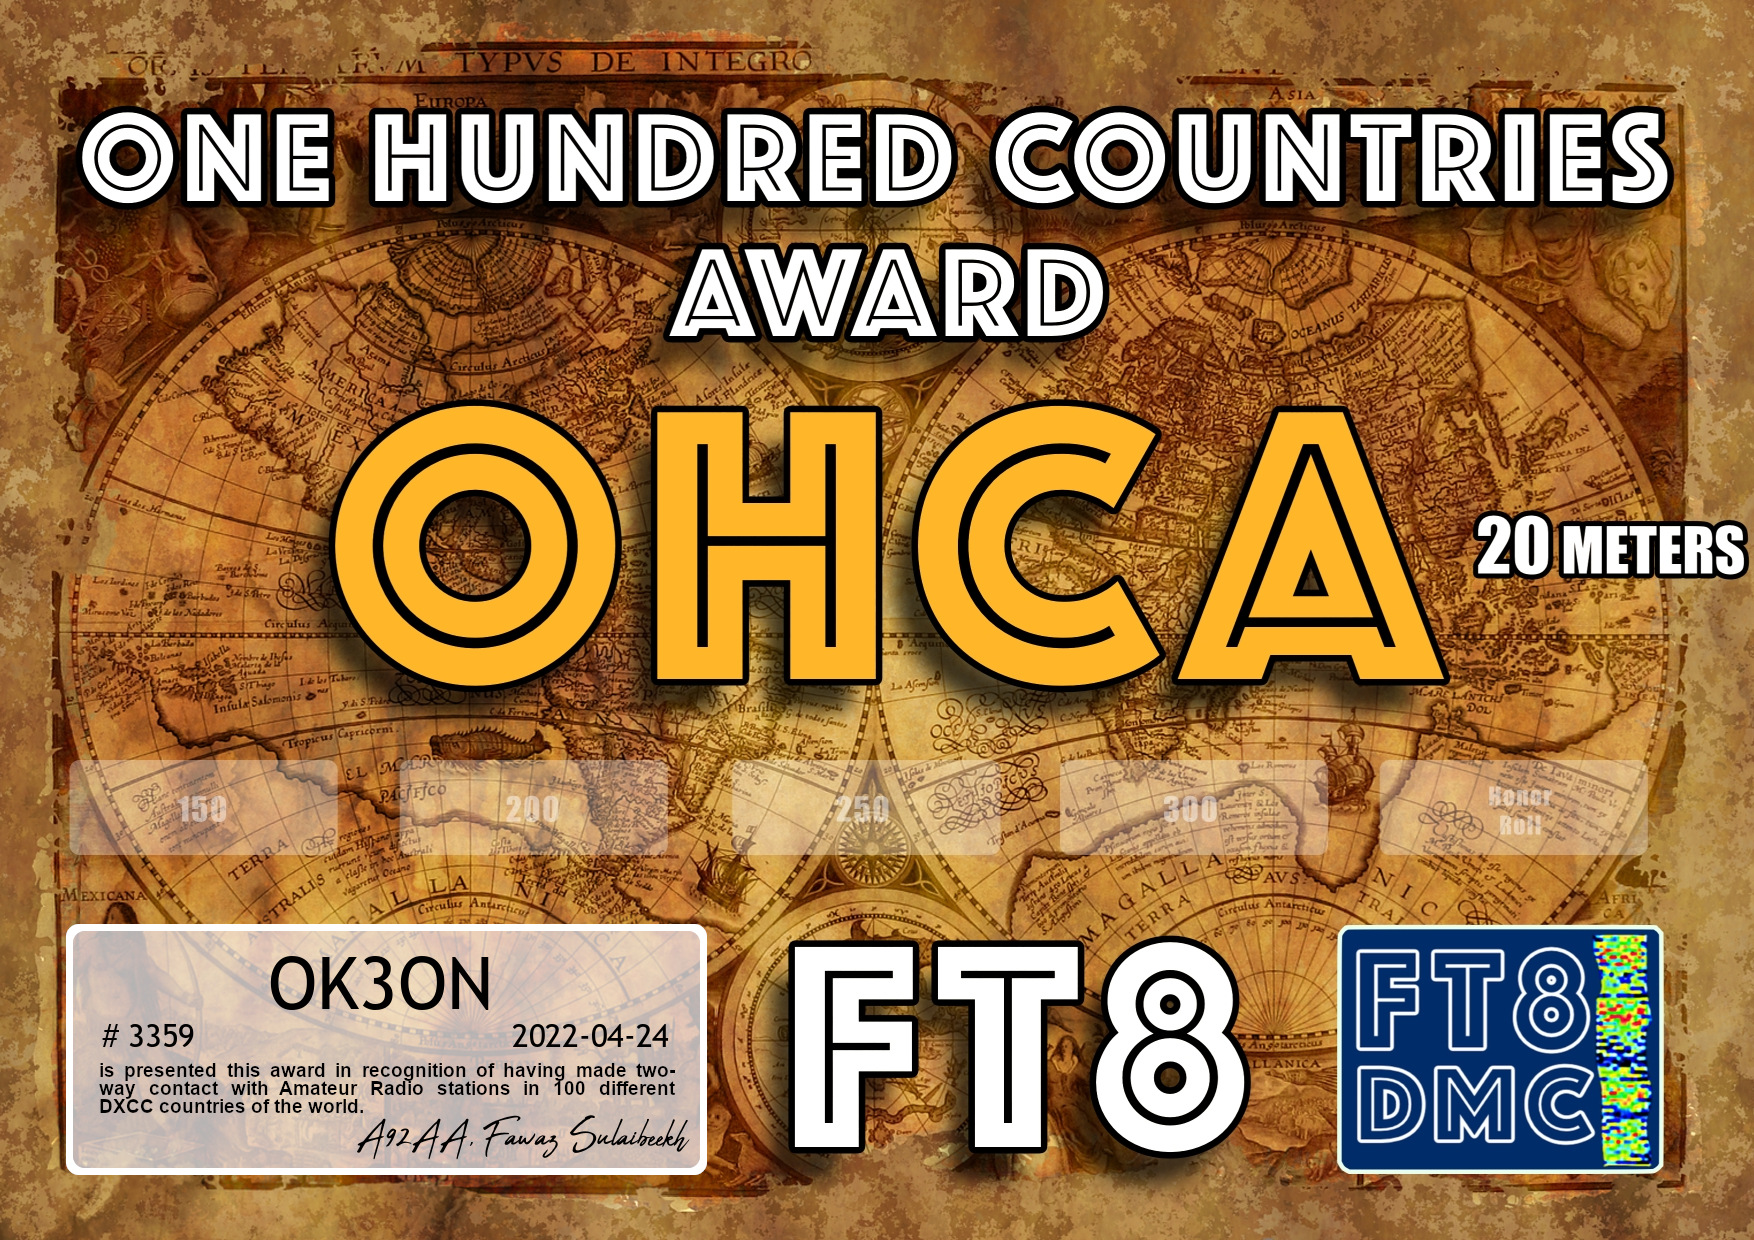 awards/OK3ON-OHCA20-100_FT8DMC.jpg